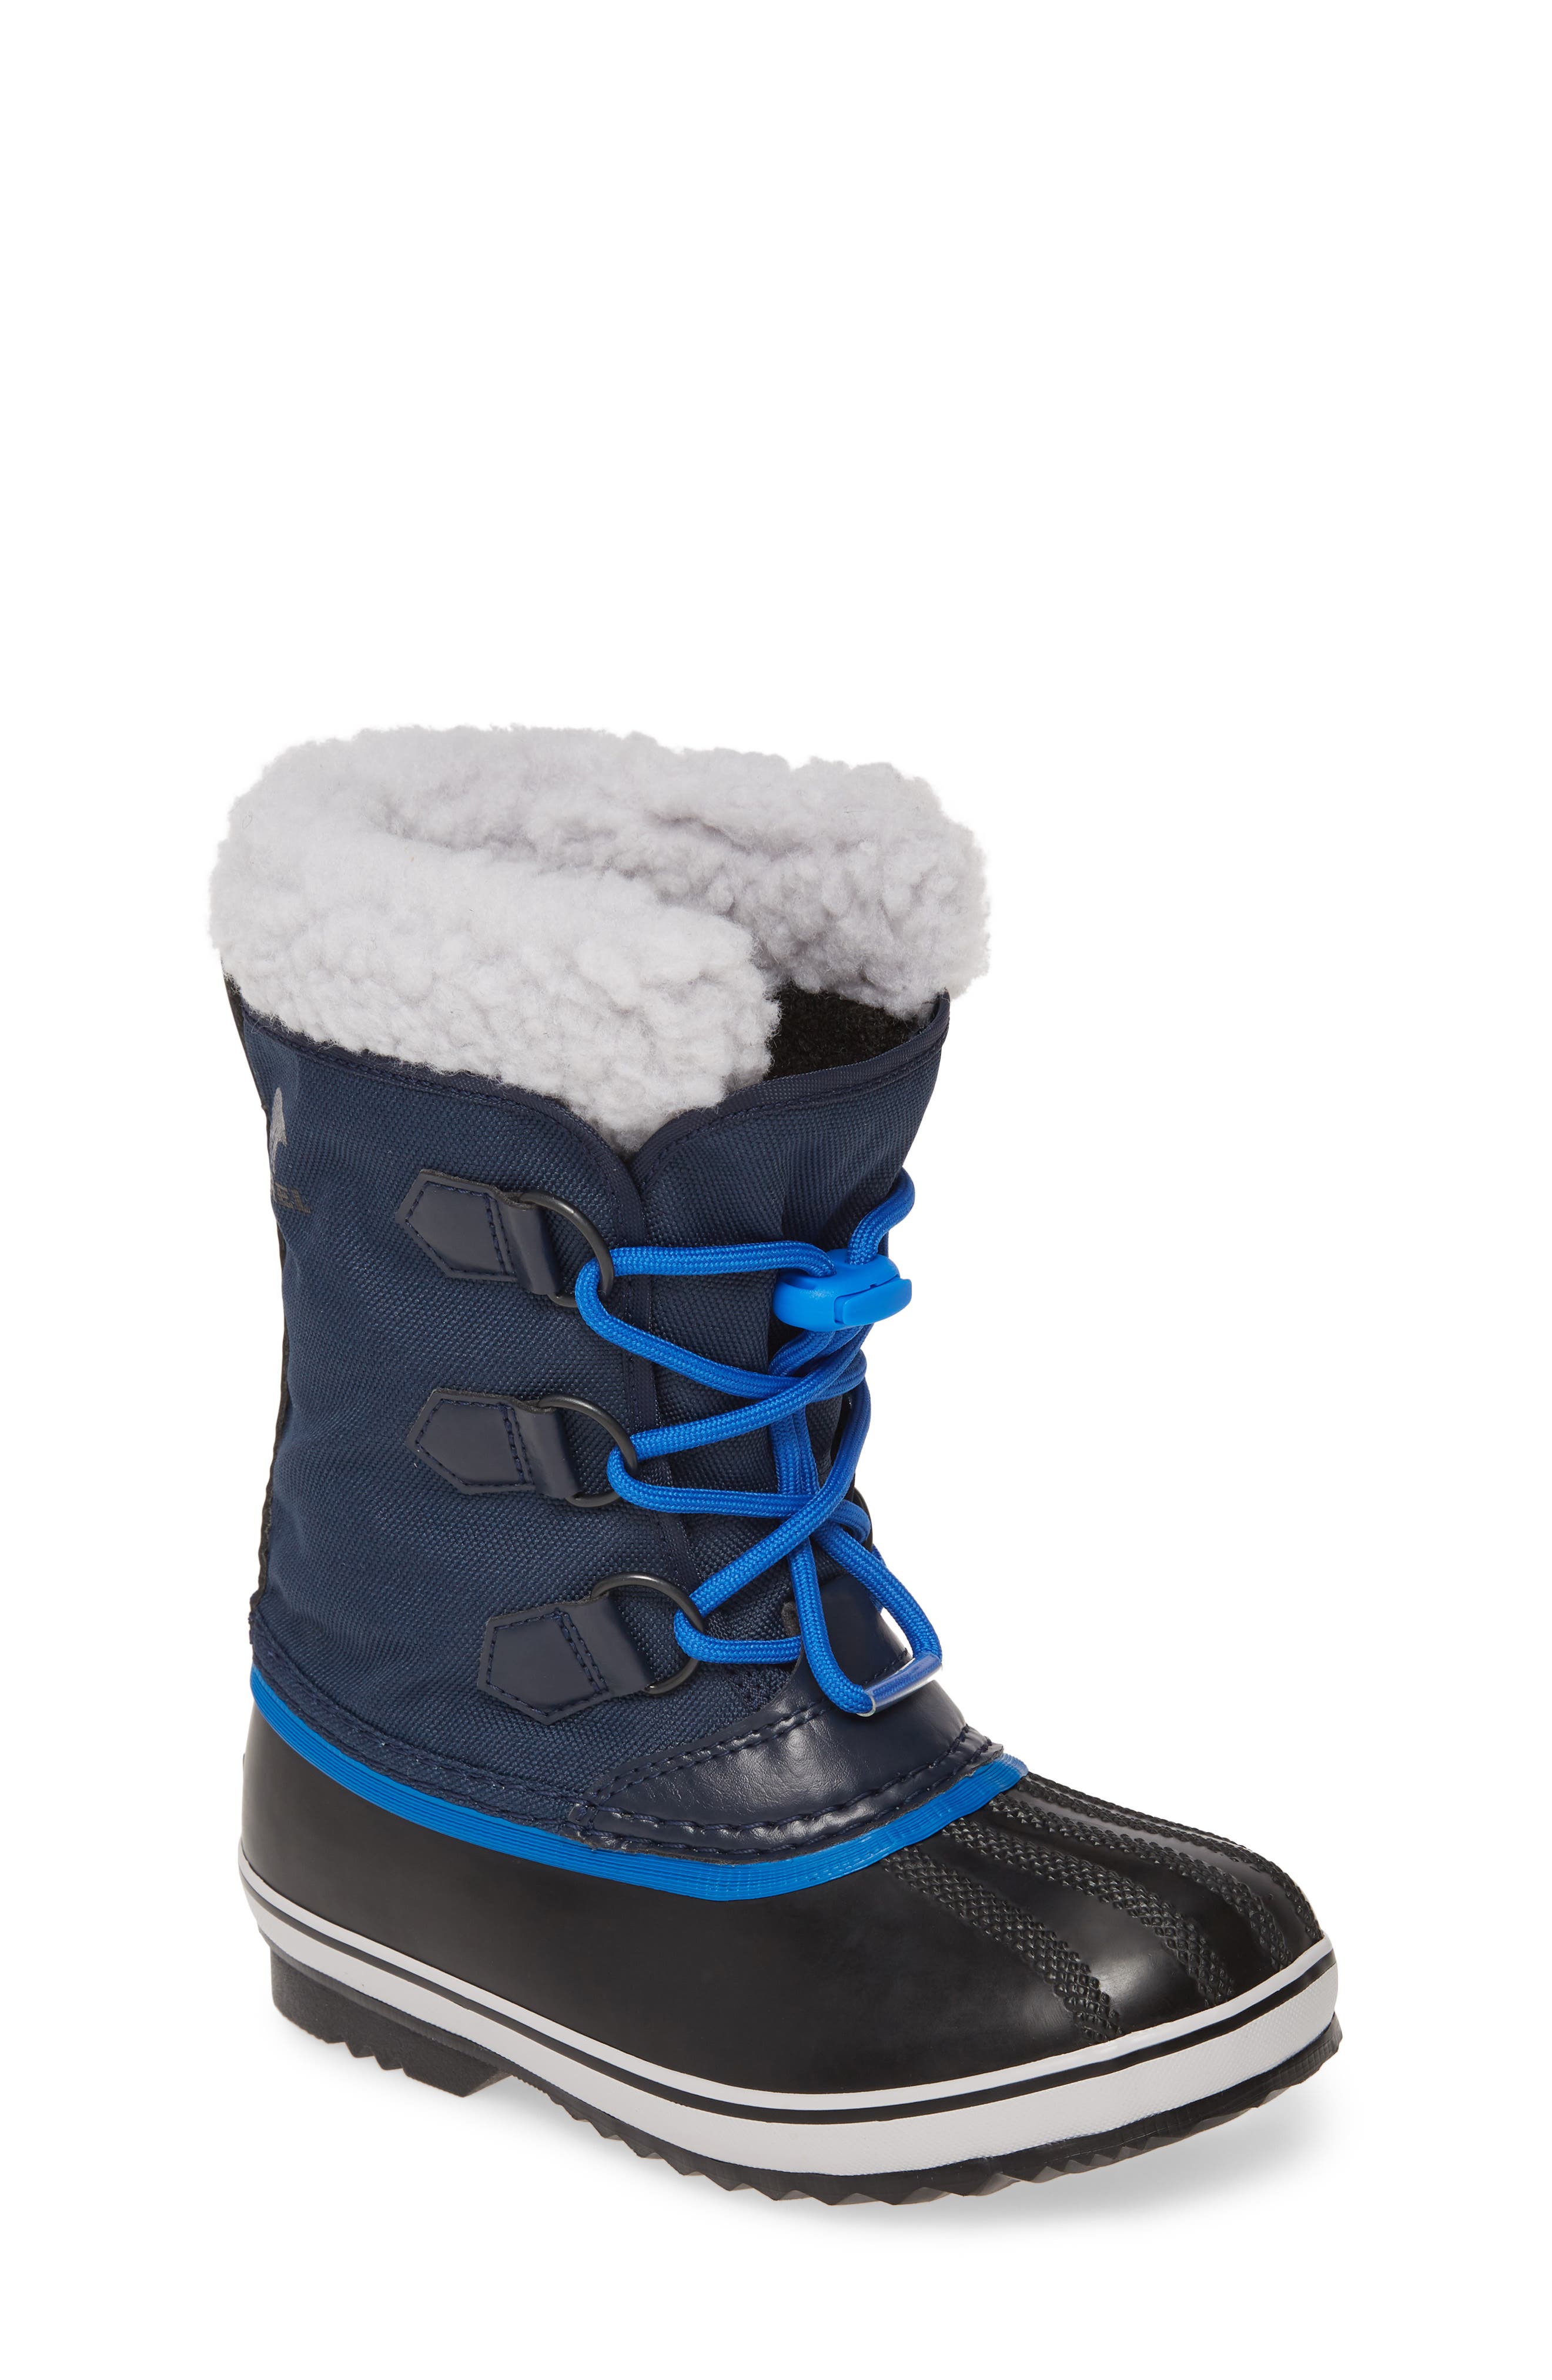 snow boots nordstrom rack